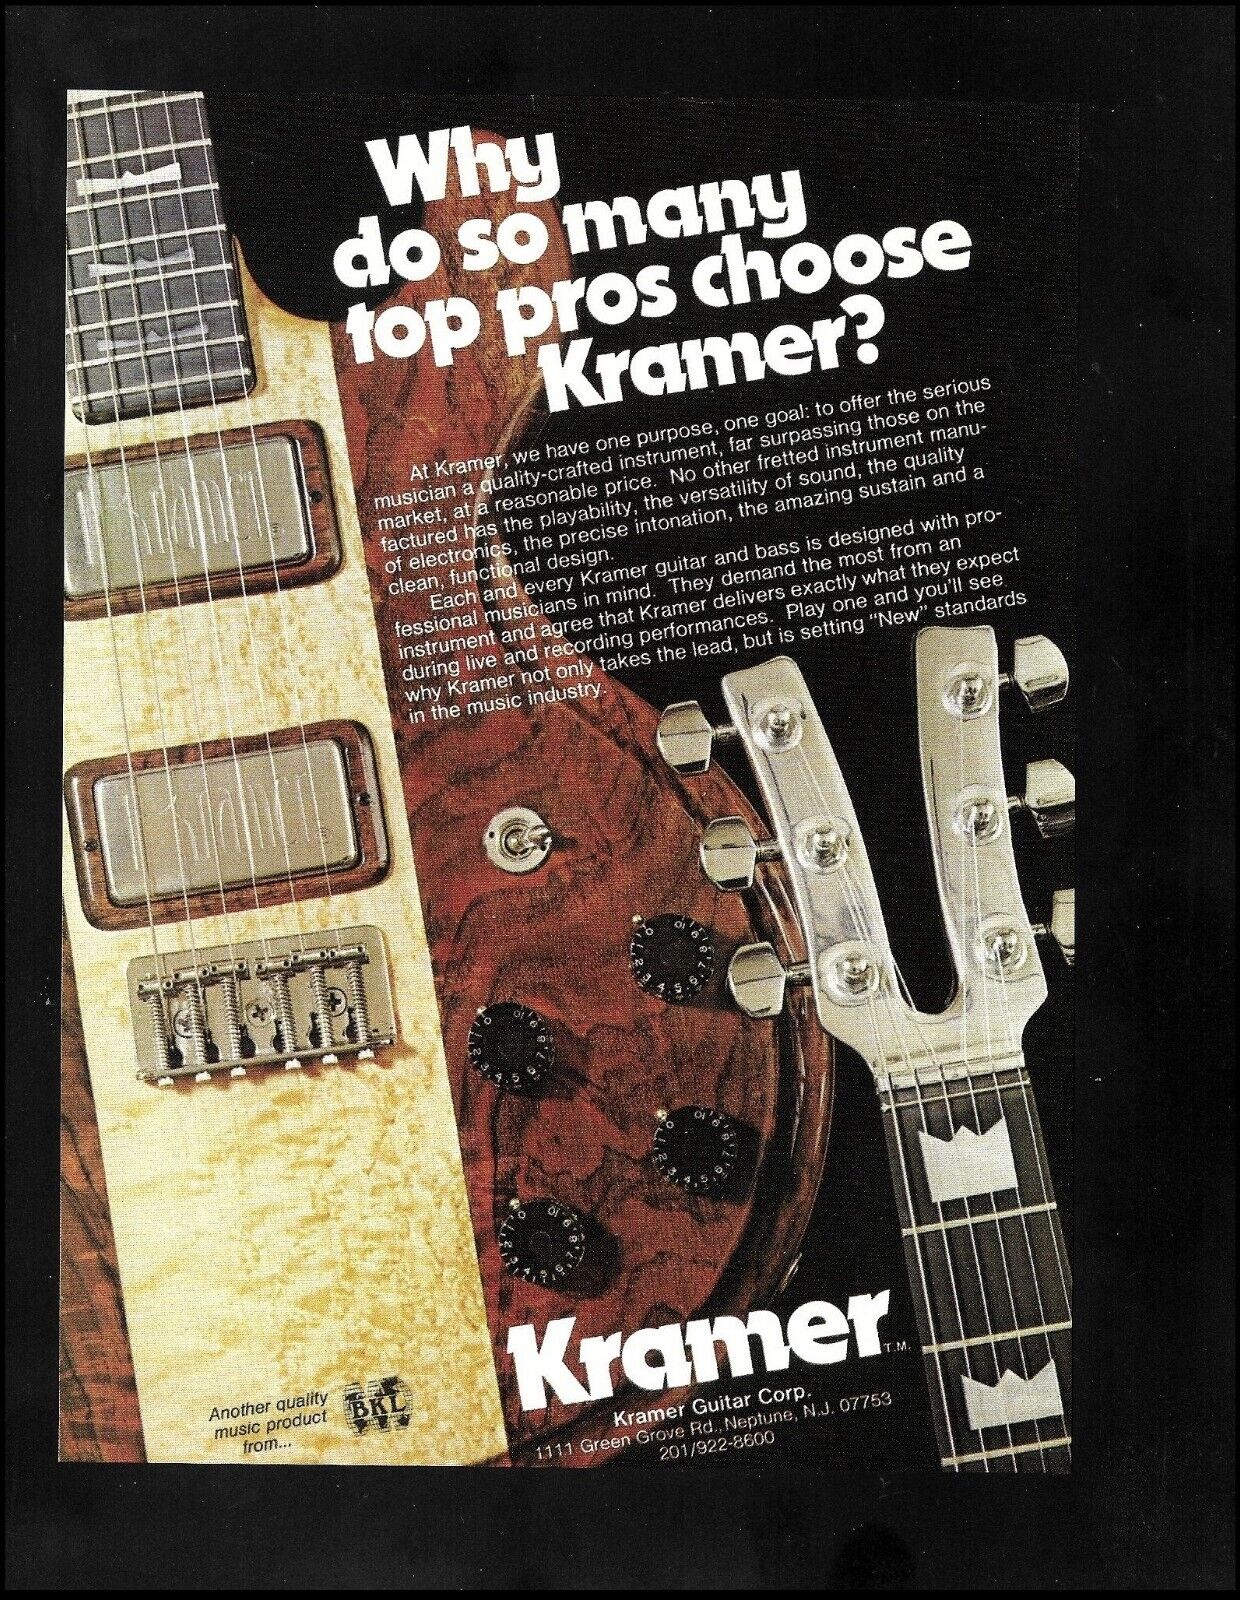 Vintage 1981 Kramer Guitar advertisement print reprinted ad in 2020